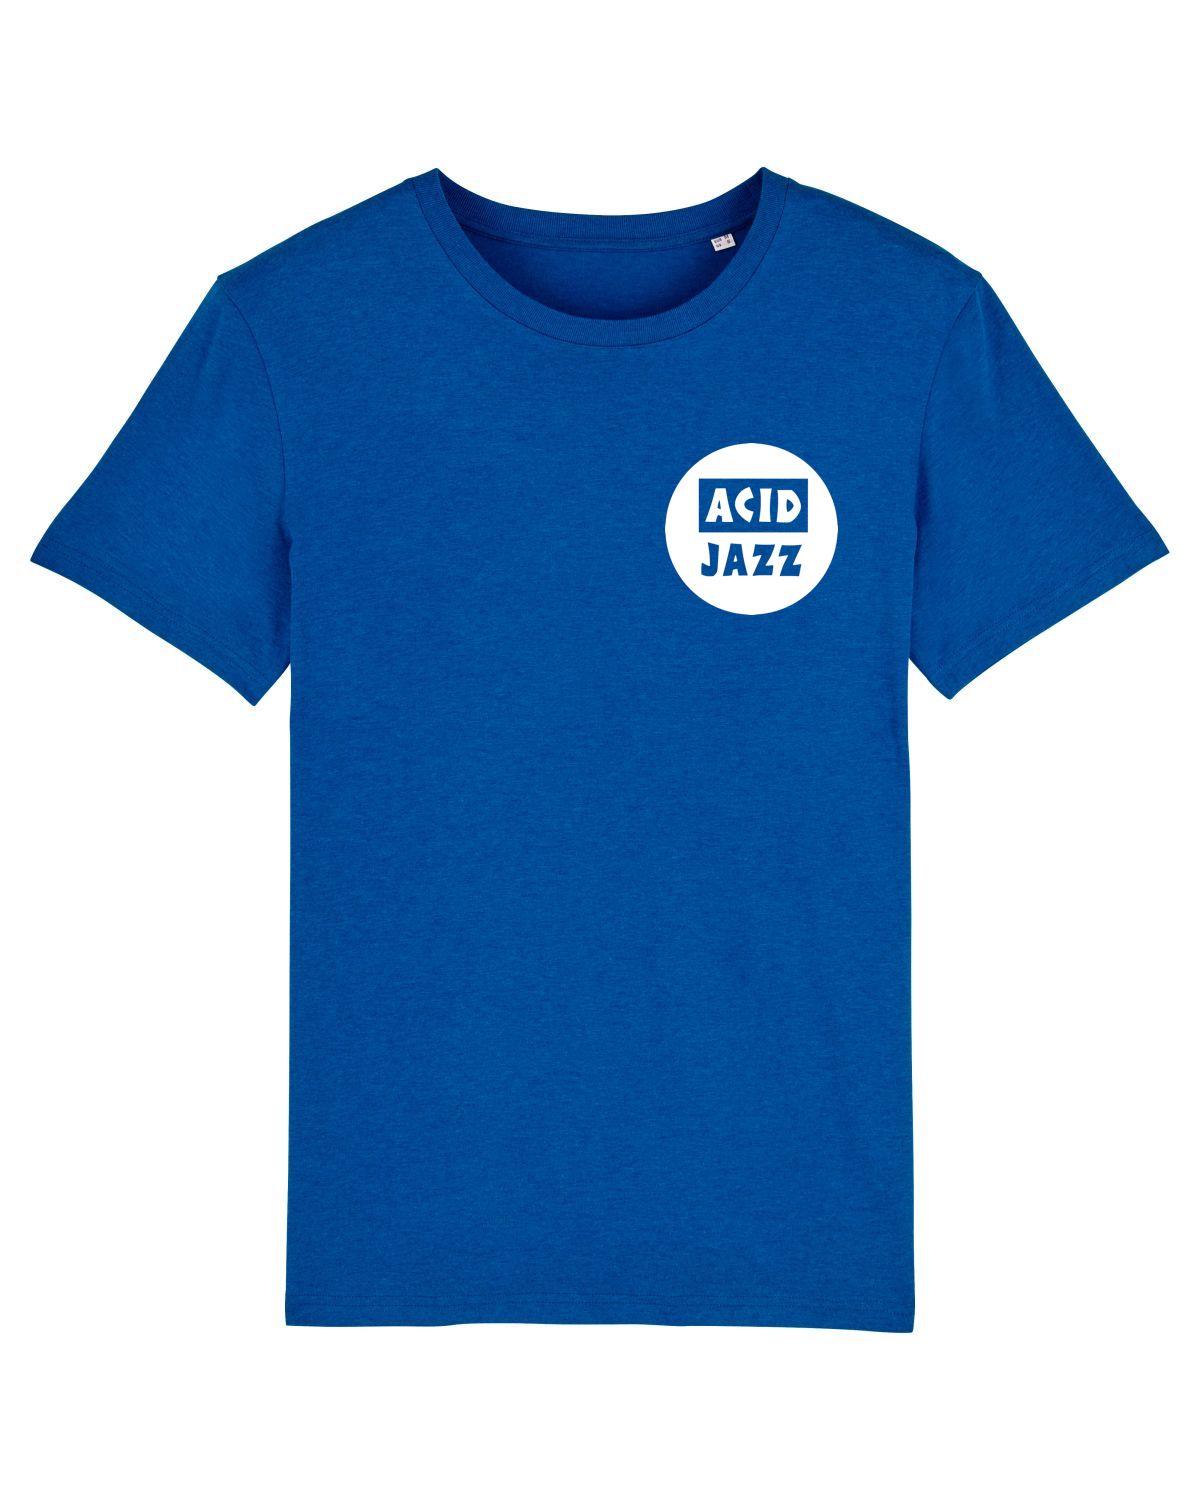 ACID JAZZ: Round White Chest Logo T-Shirt Official Merchandise of Acid Jazz Records (3 Colour Options) - SOUND IS COLOUR